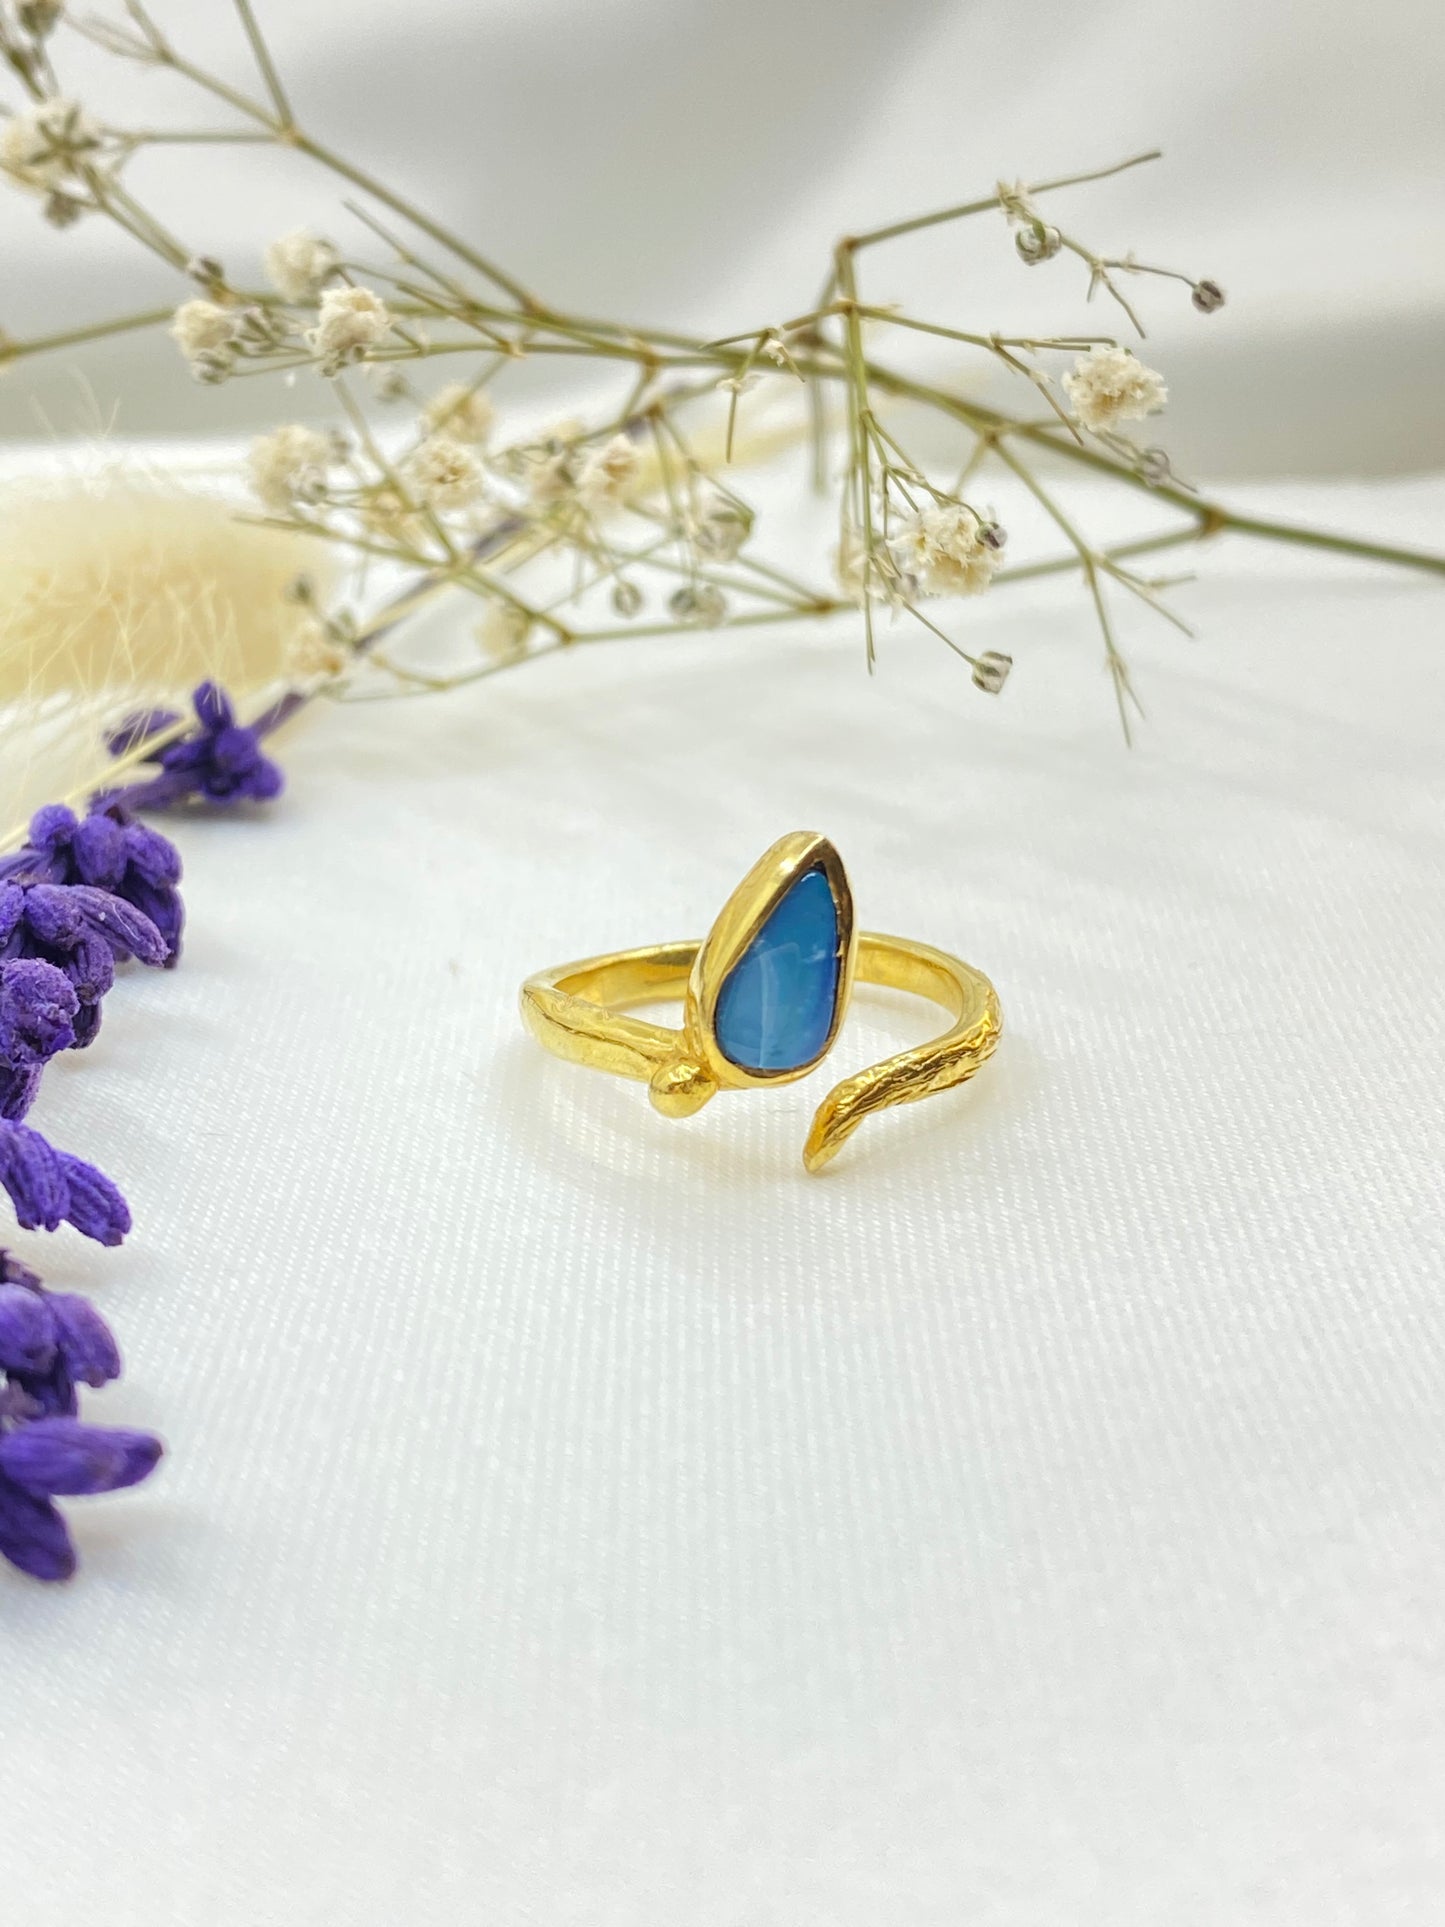 Blue Opal Ring